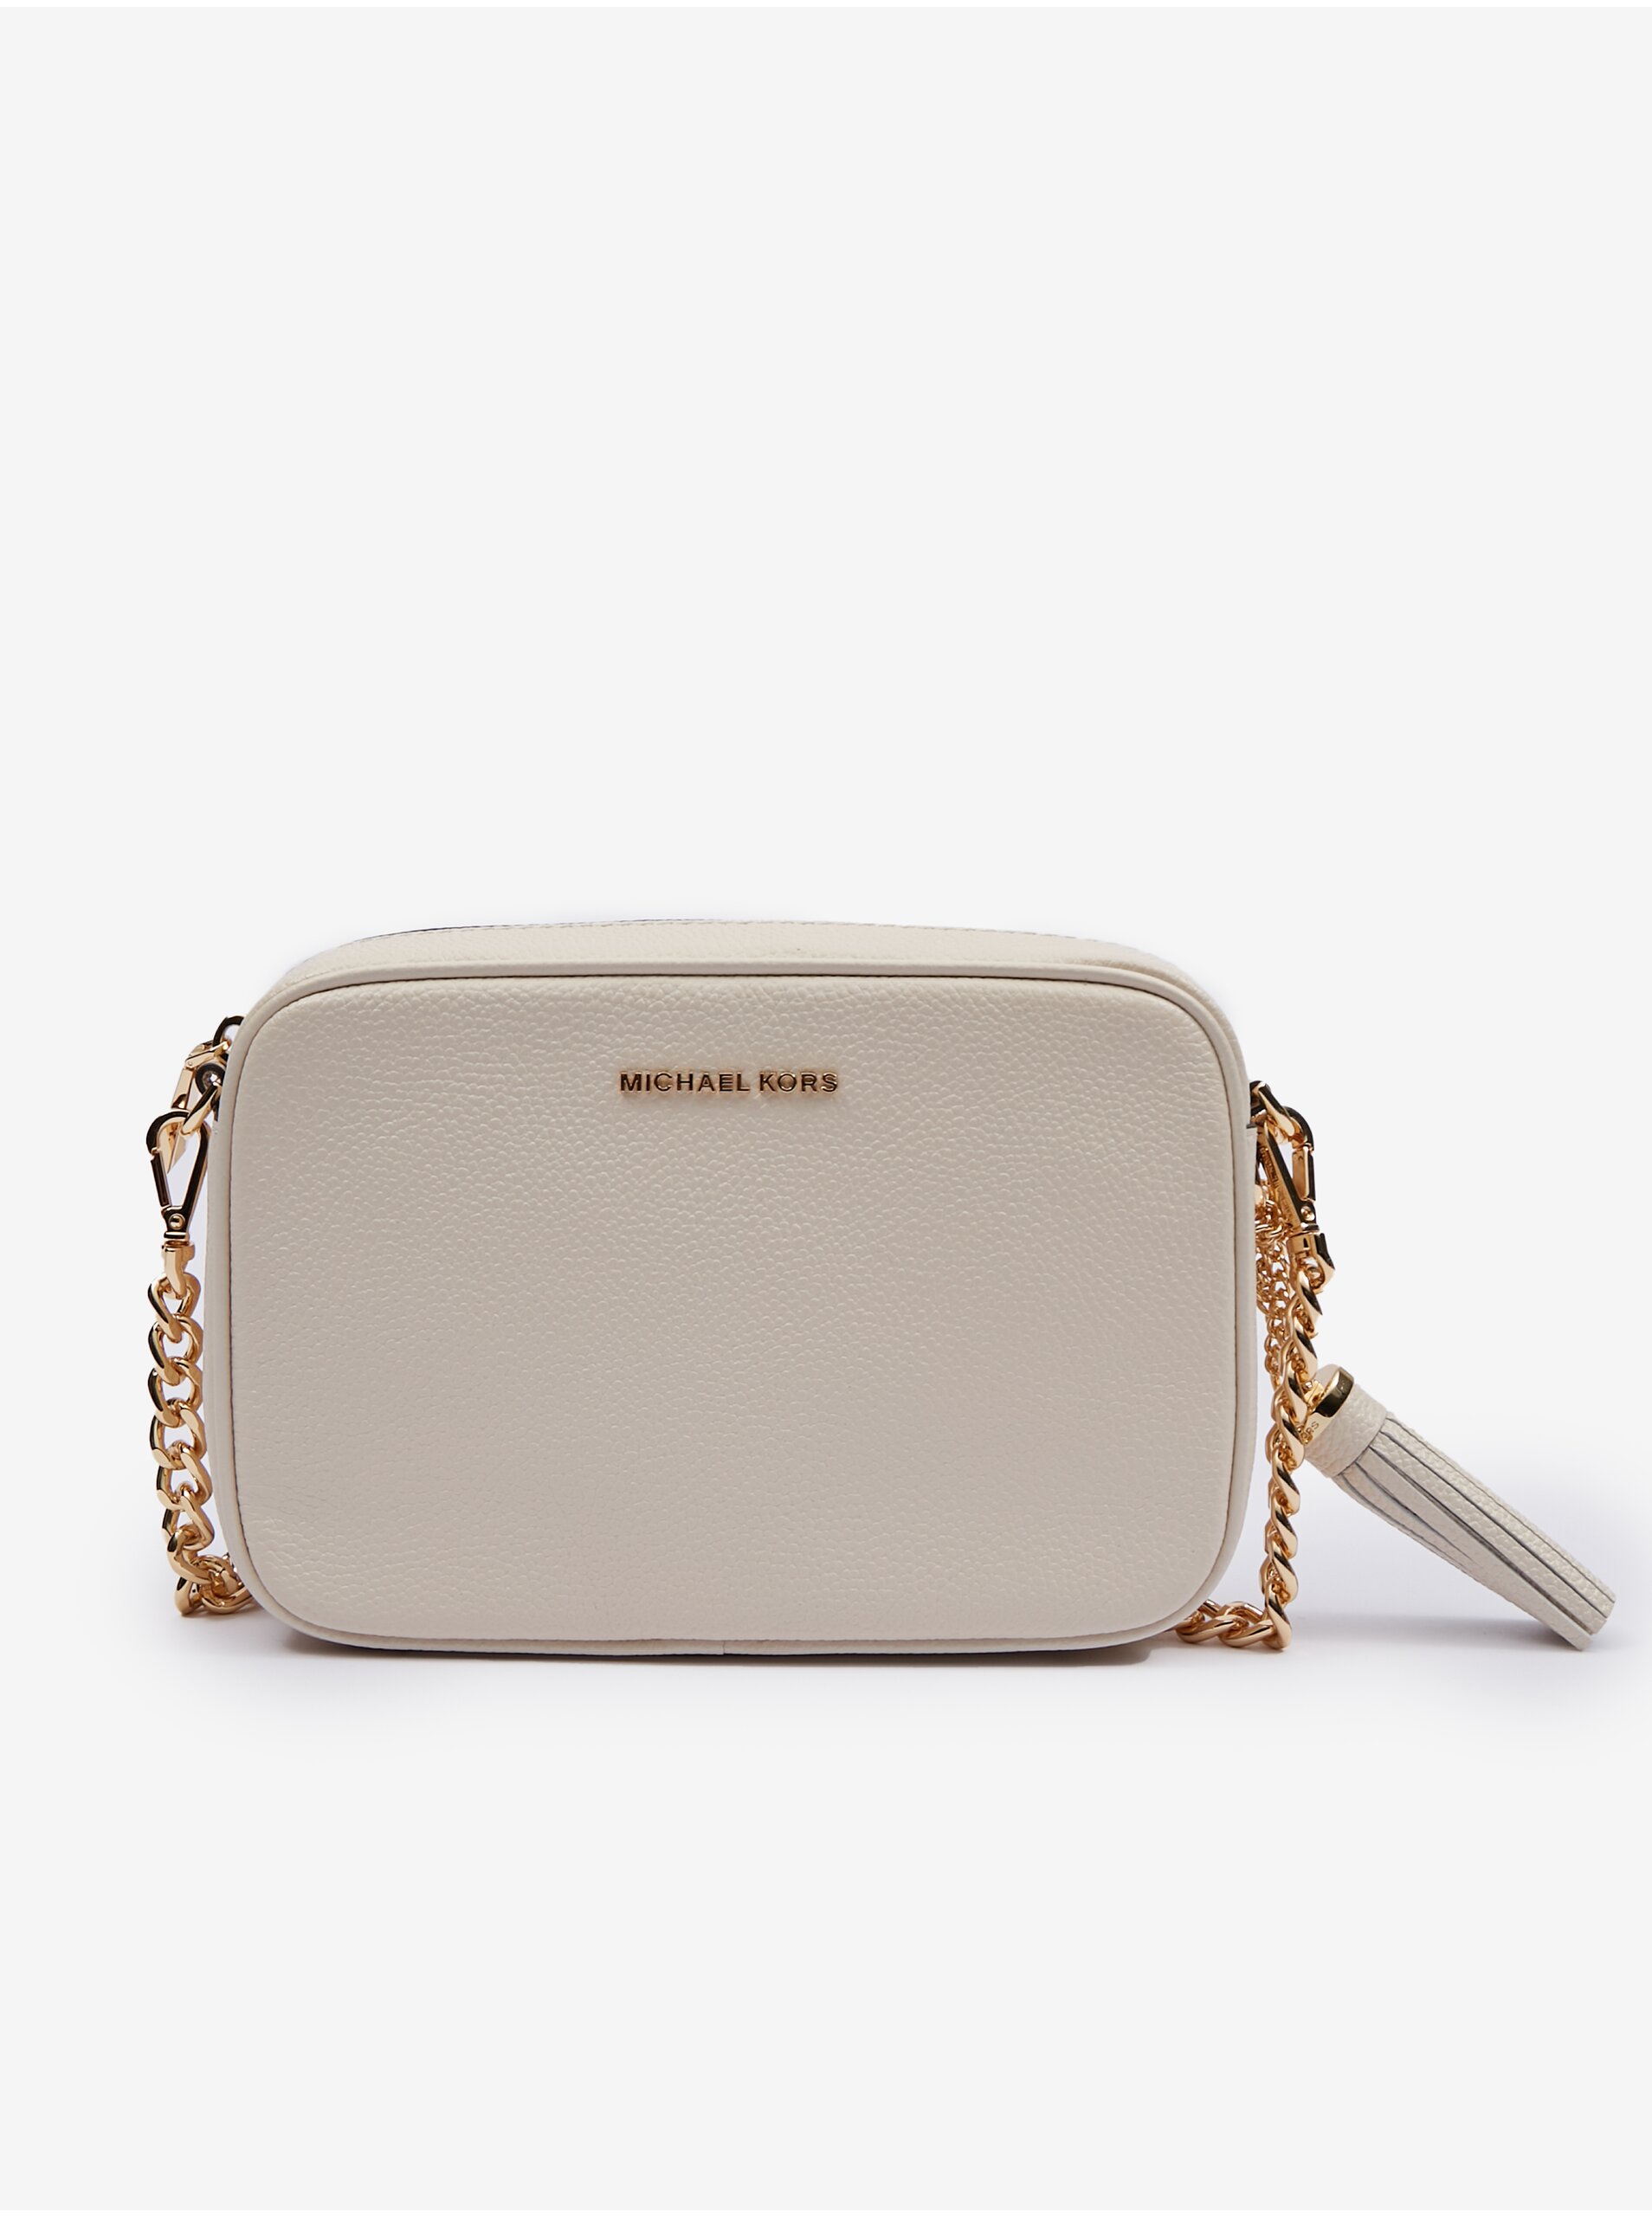 Cream Women's Leather Crossbody Handbag Michael Kors - Women